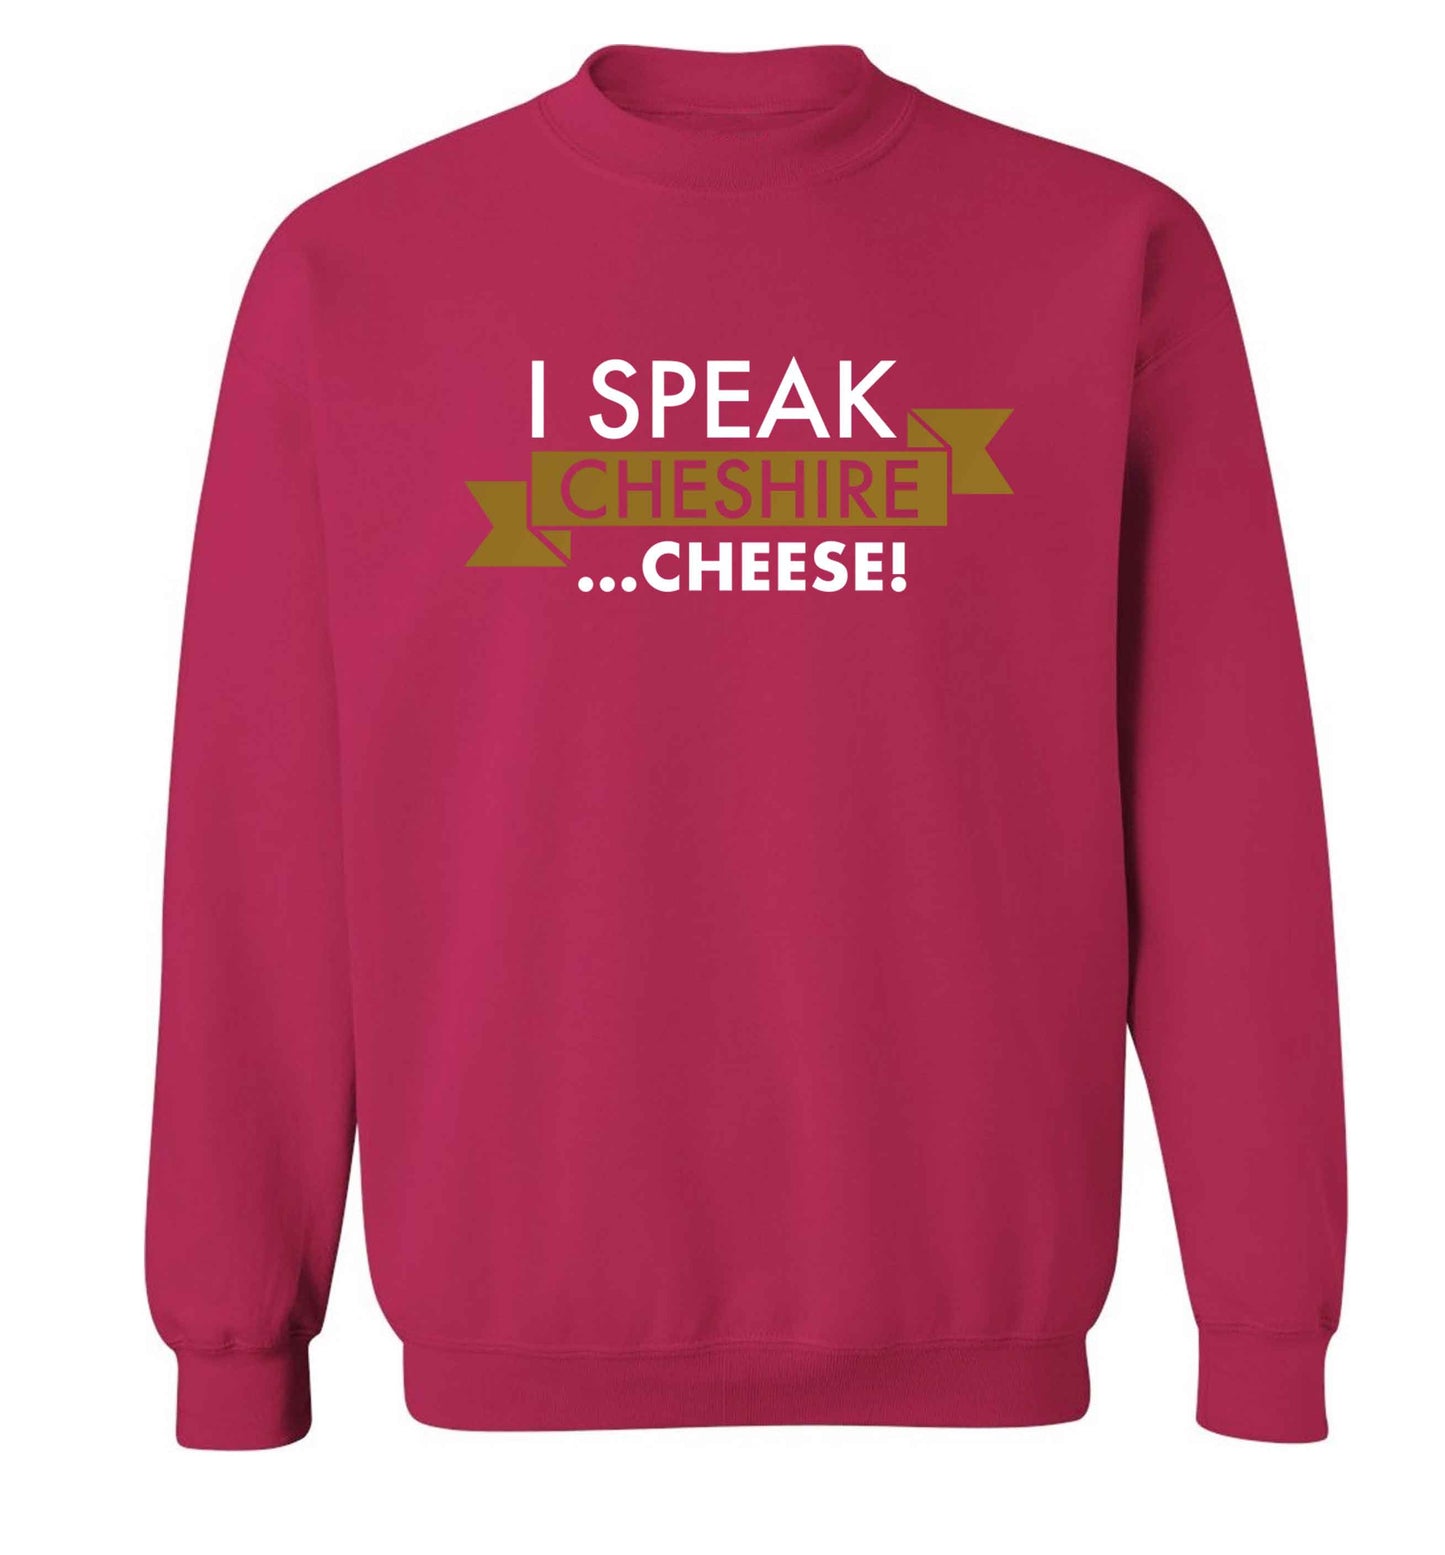 I speak Cheshire cheese Adult's unisex pink Sweater 2XL